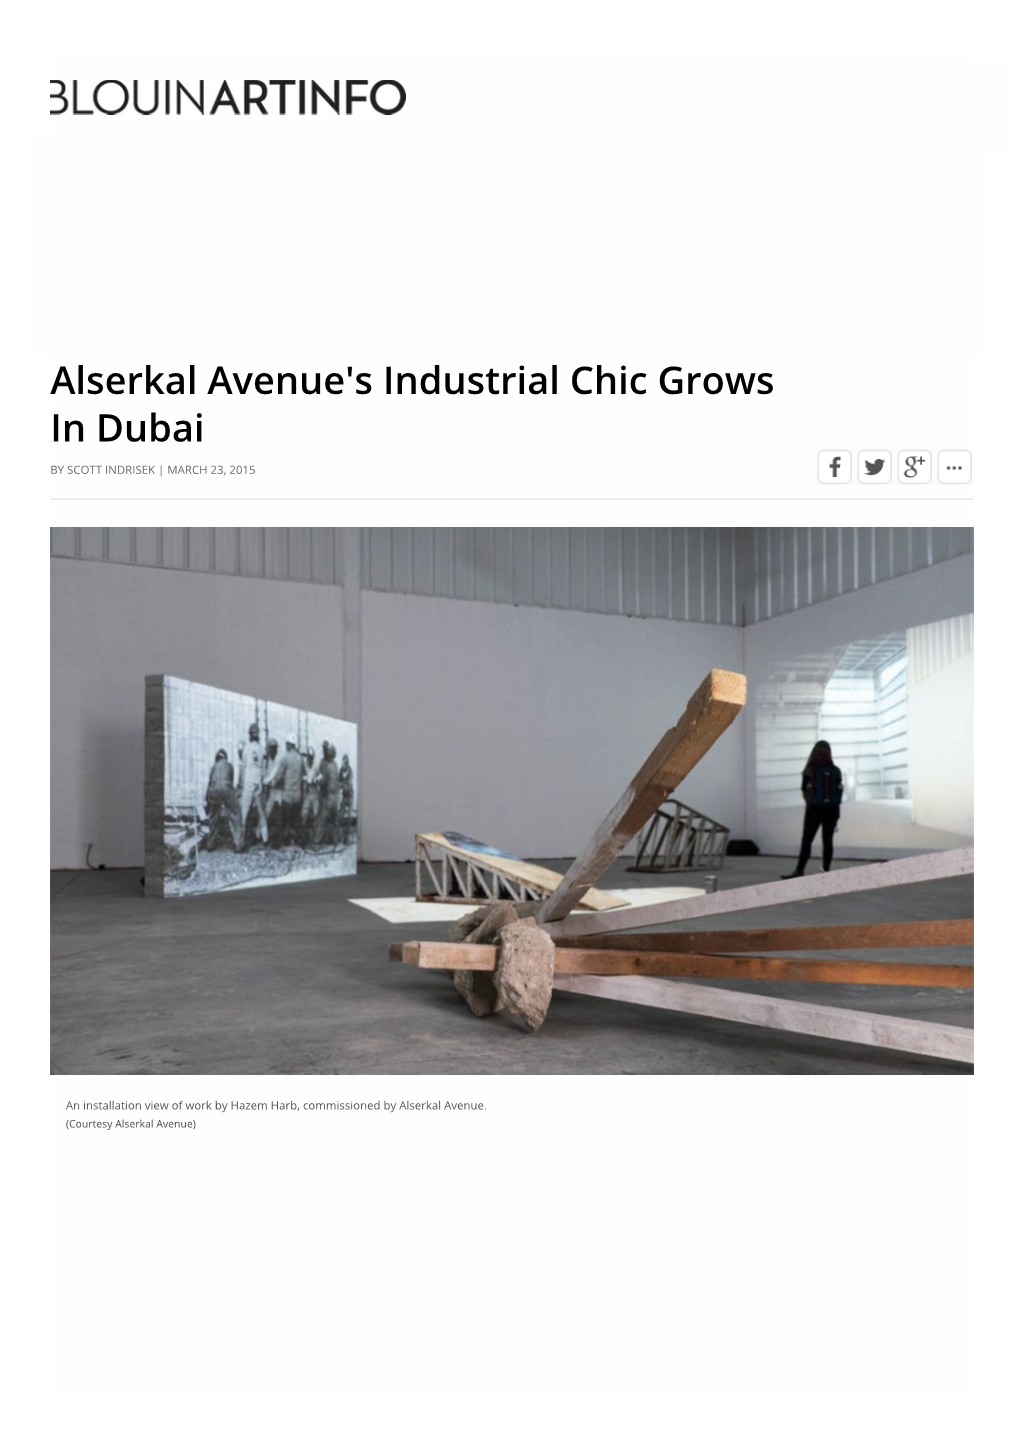 Alserkal Avenue's Industrial Chic Grows in Dubai | BLOUIN ARTINFO